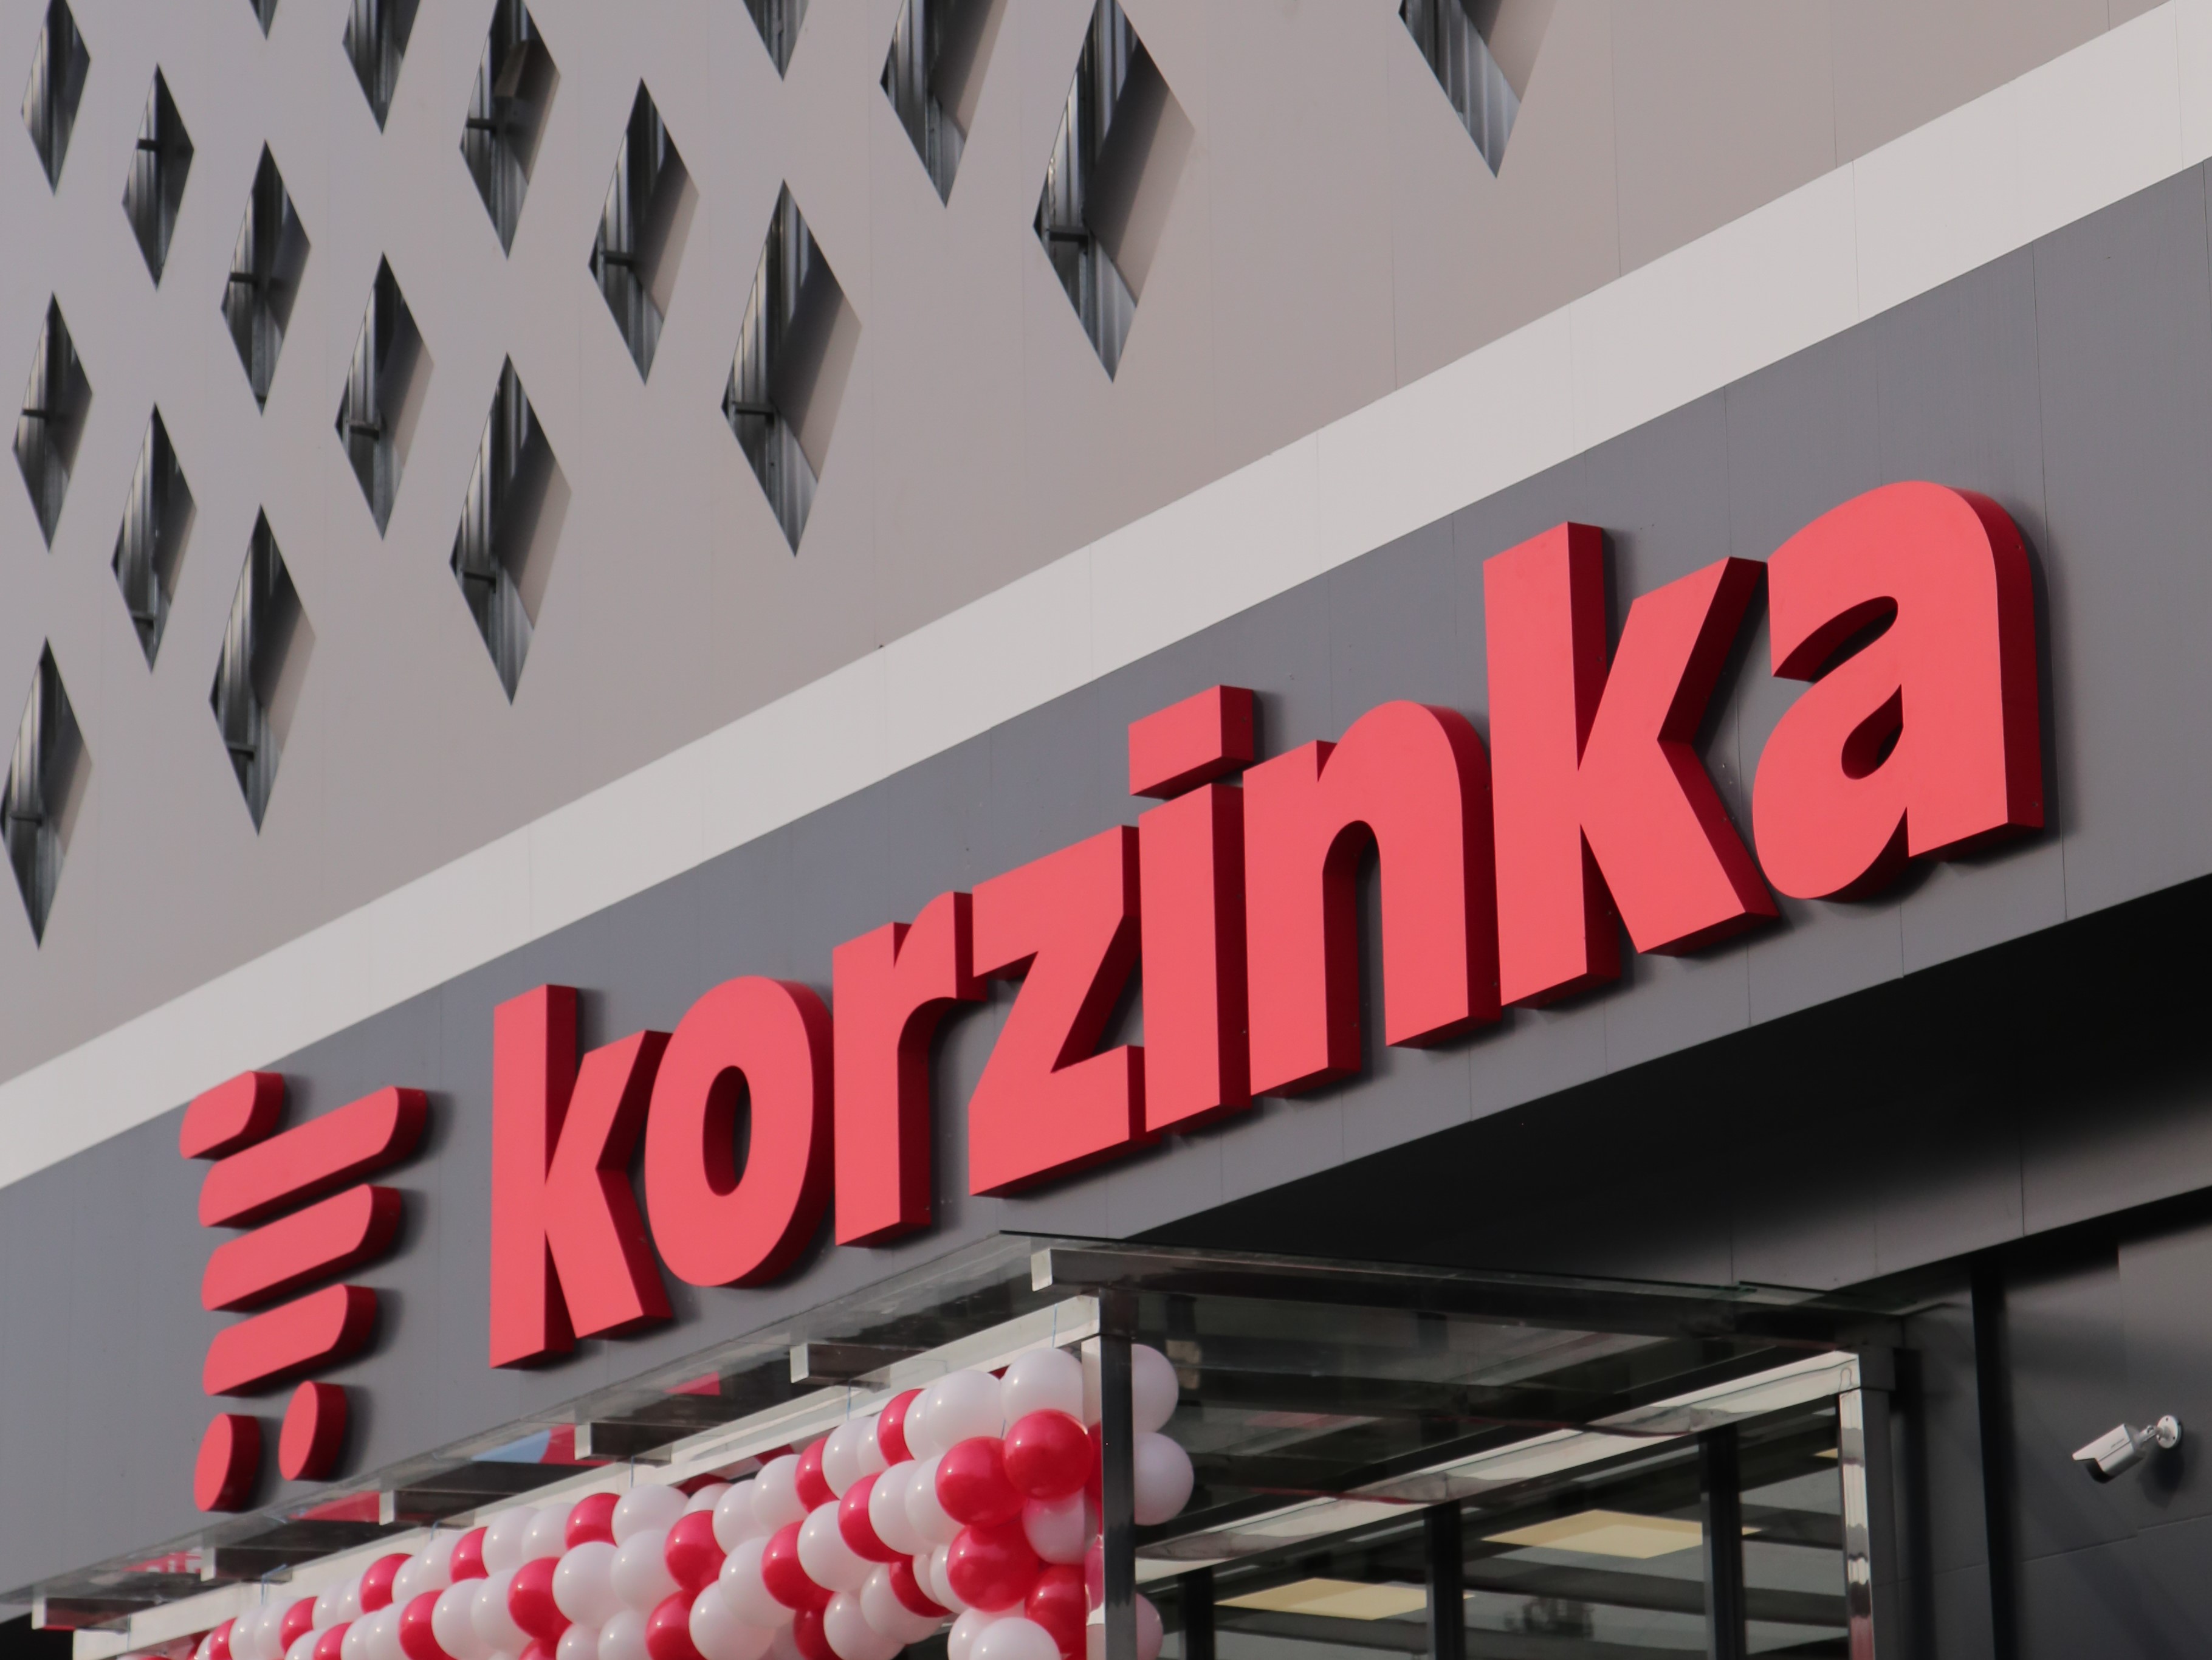 Korzinka.uz is one of the largest domestic retailers in Uzbekistan